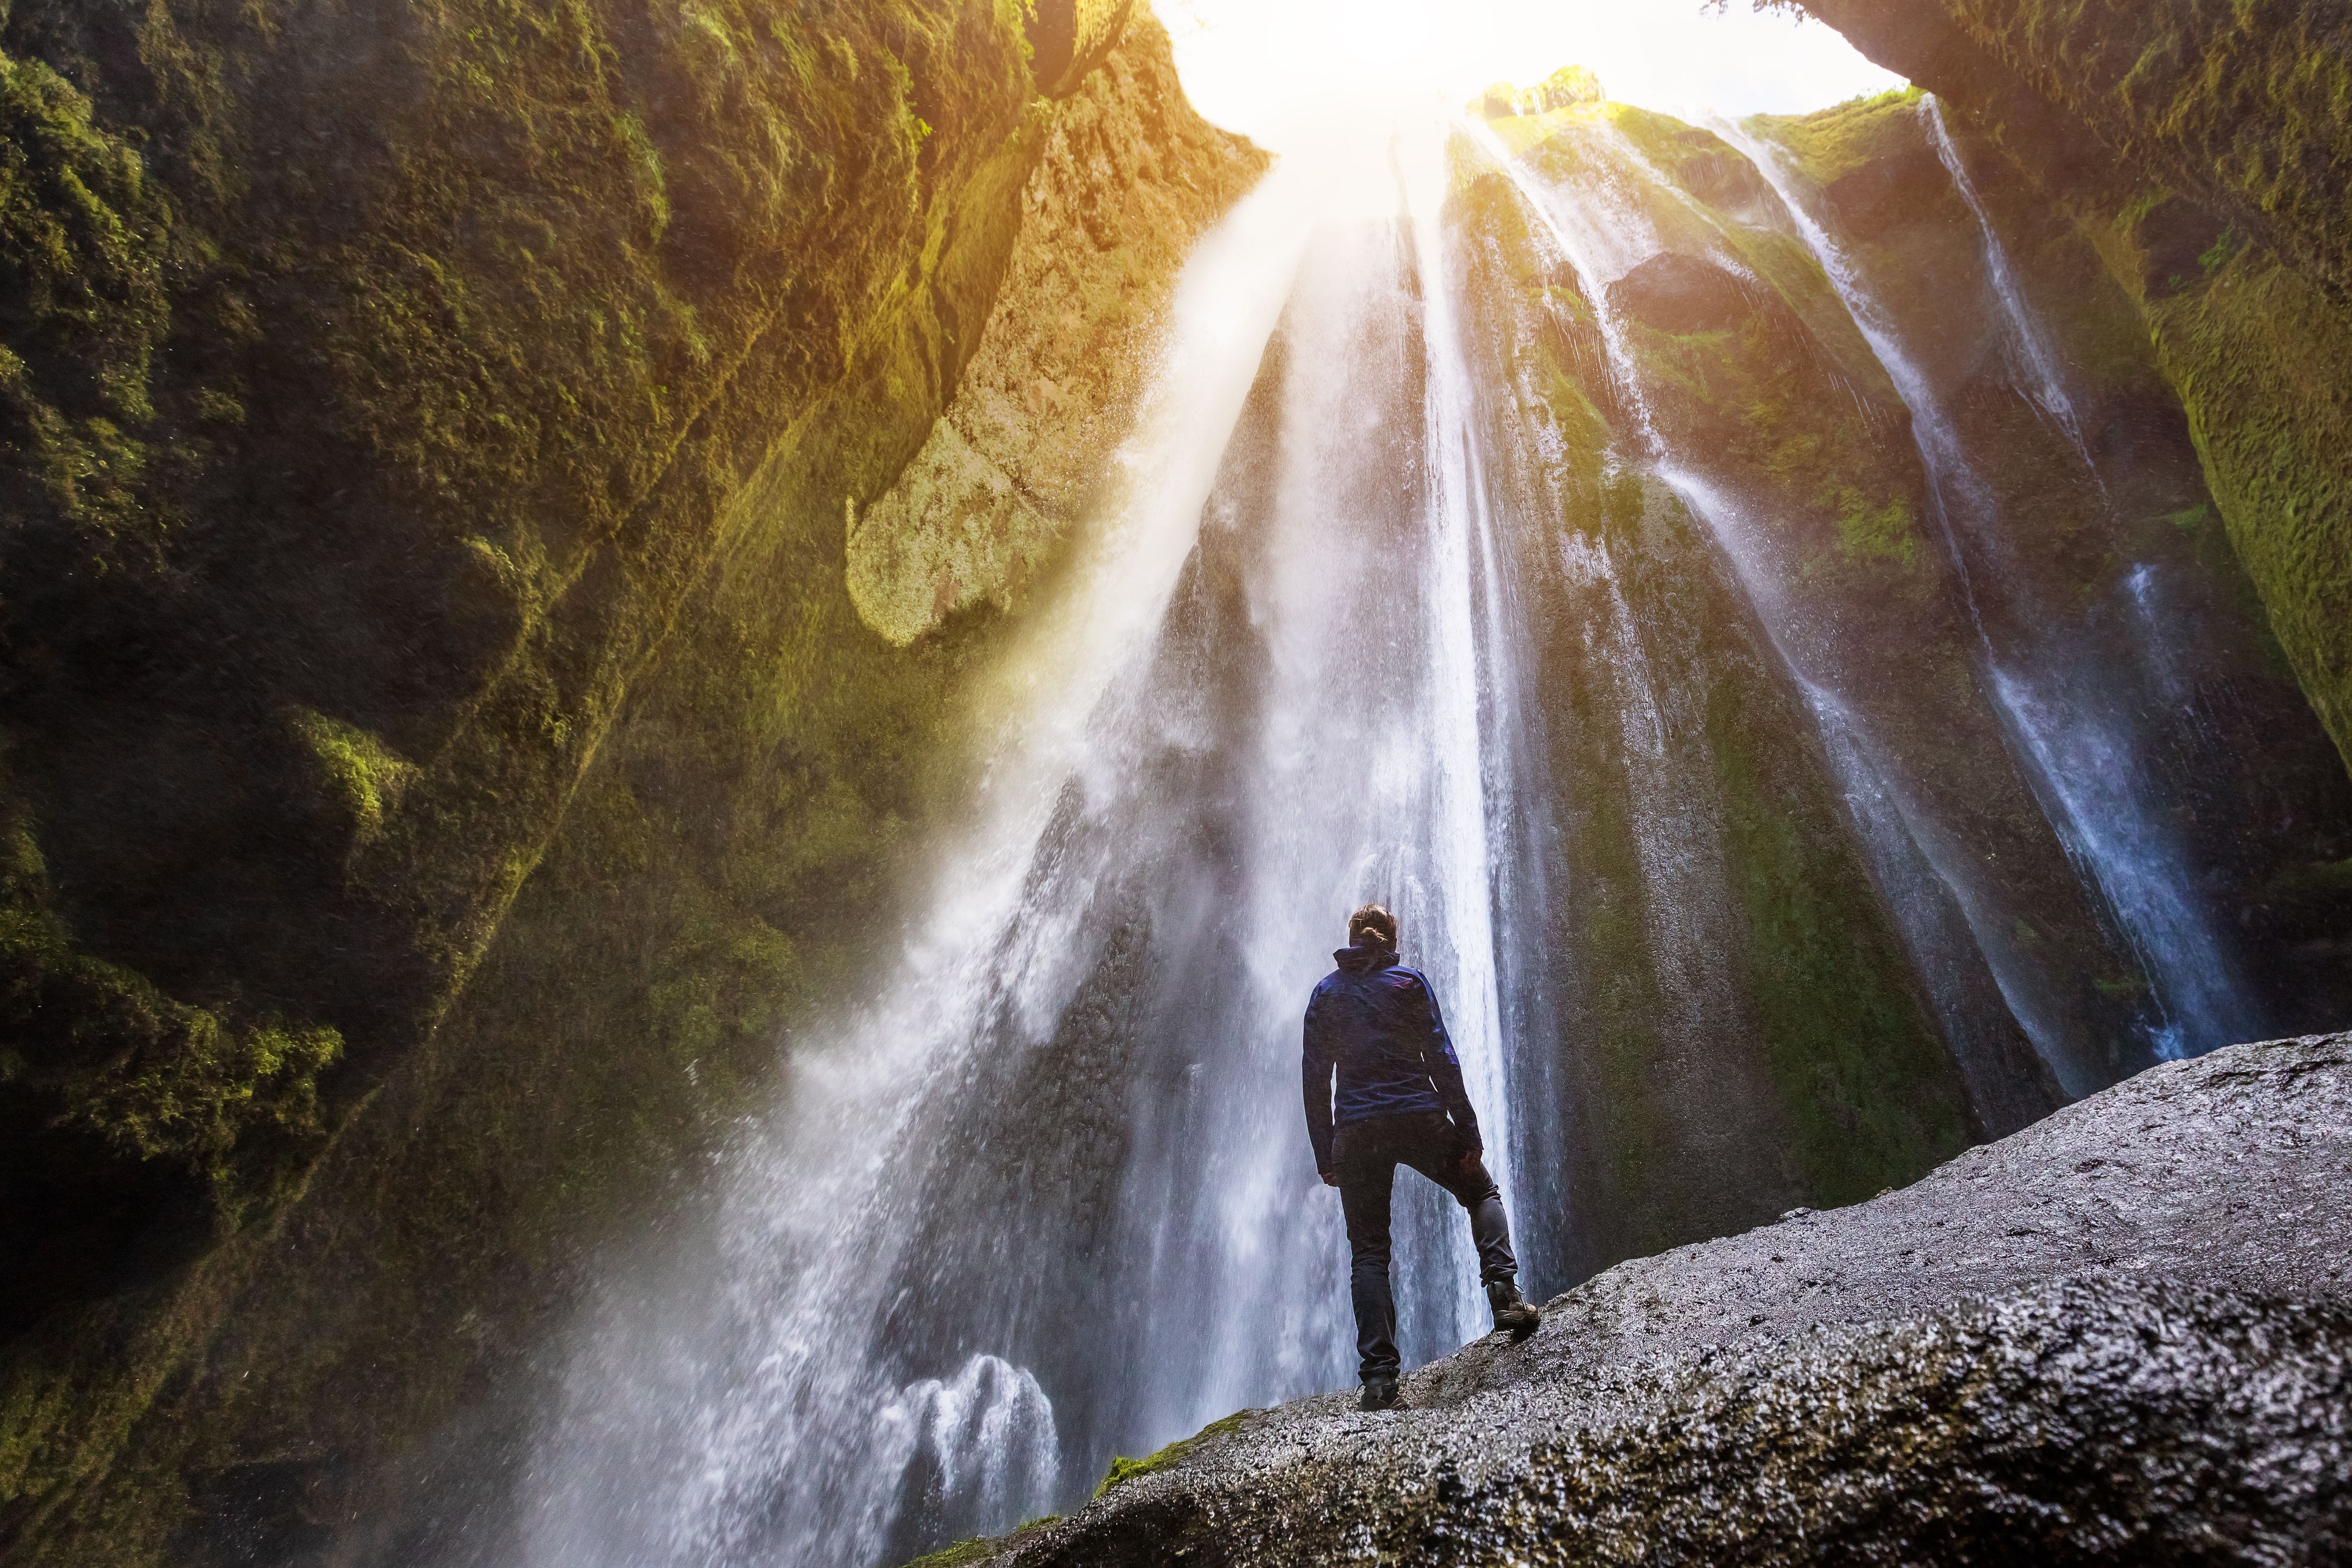 Gljufrabui waterfall, Iceland